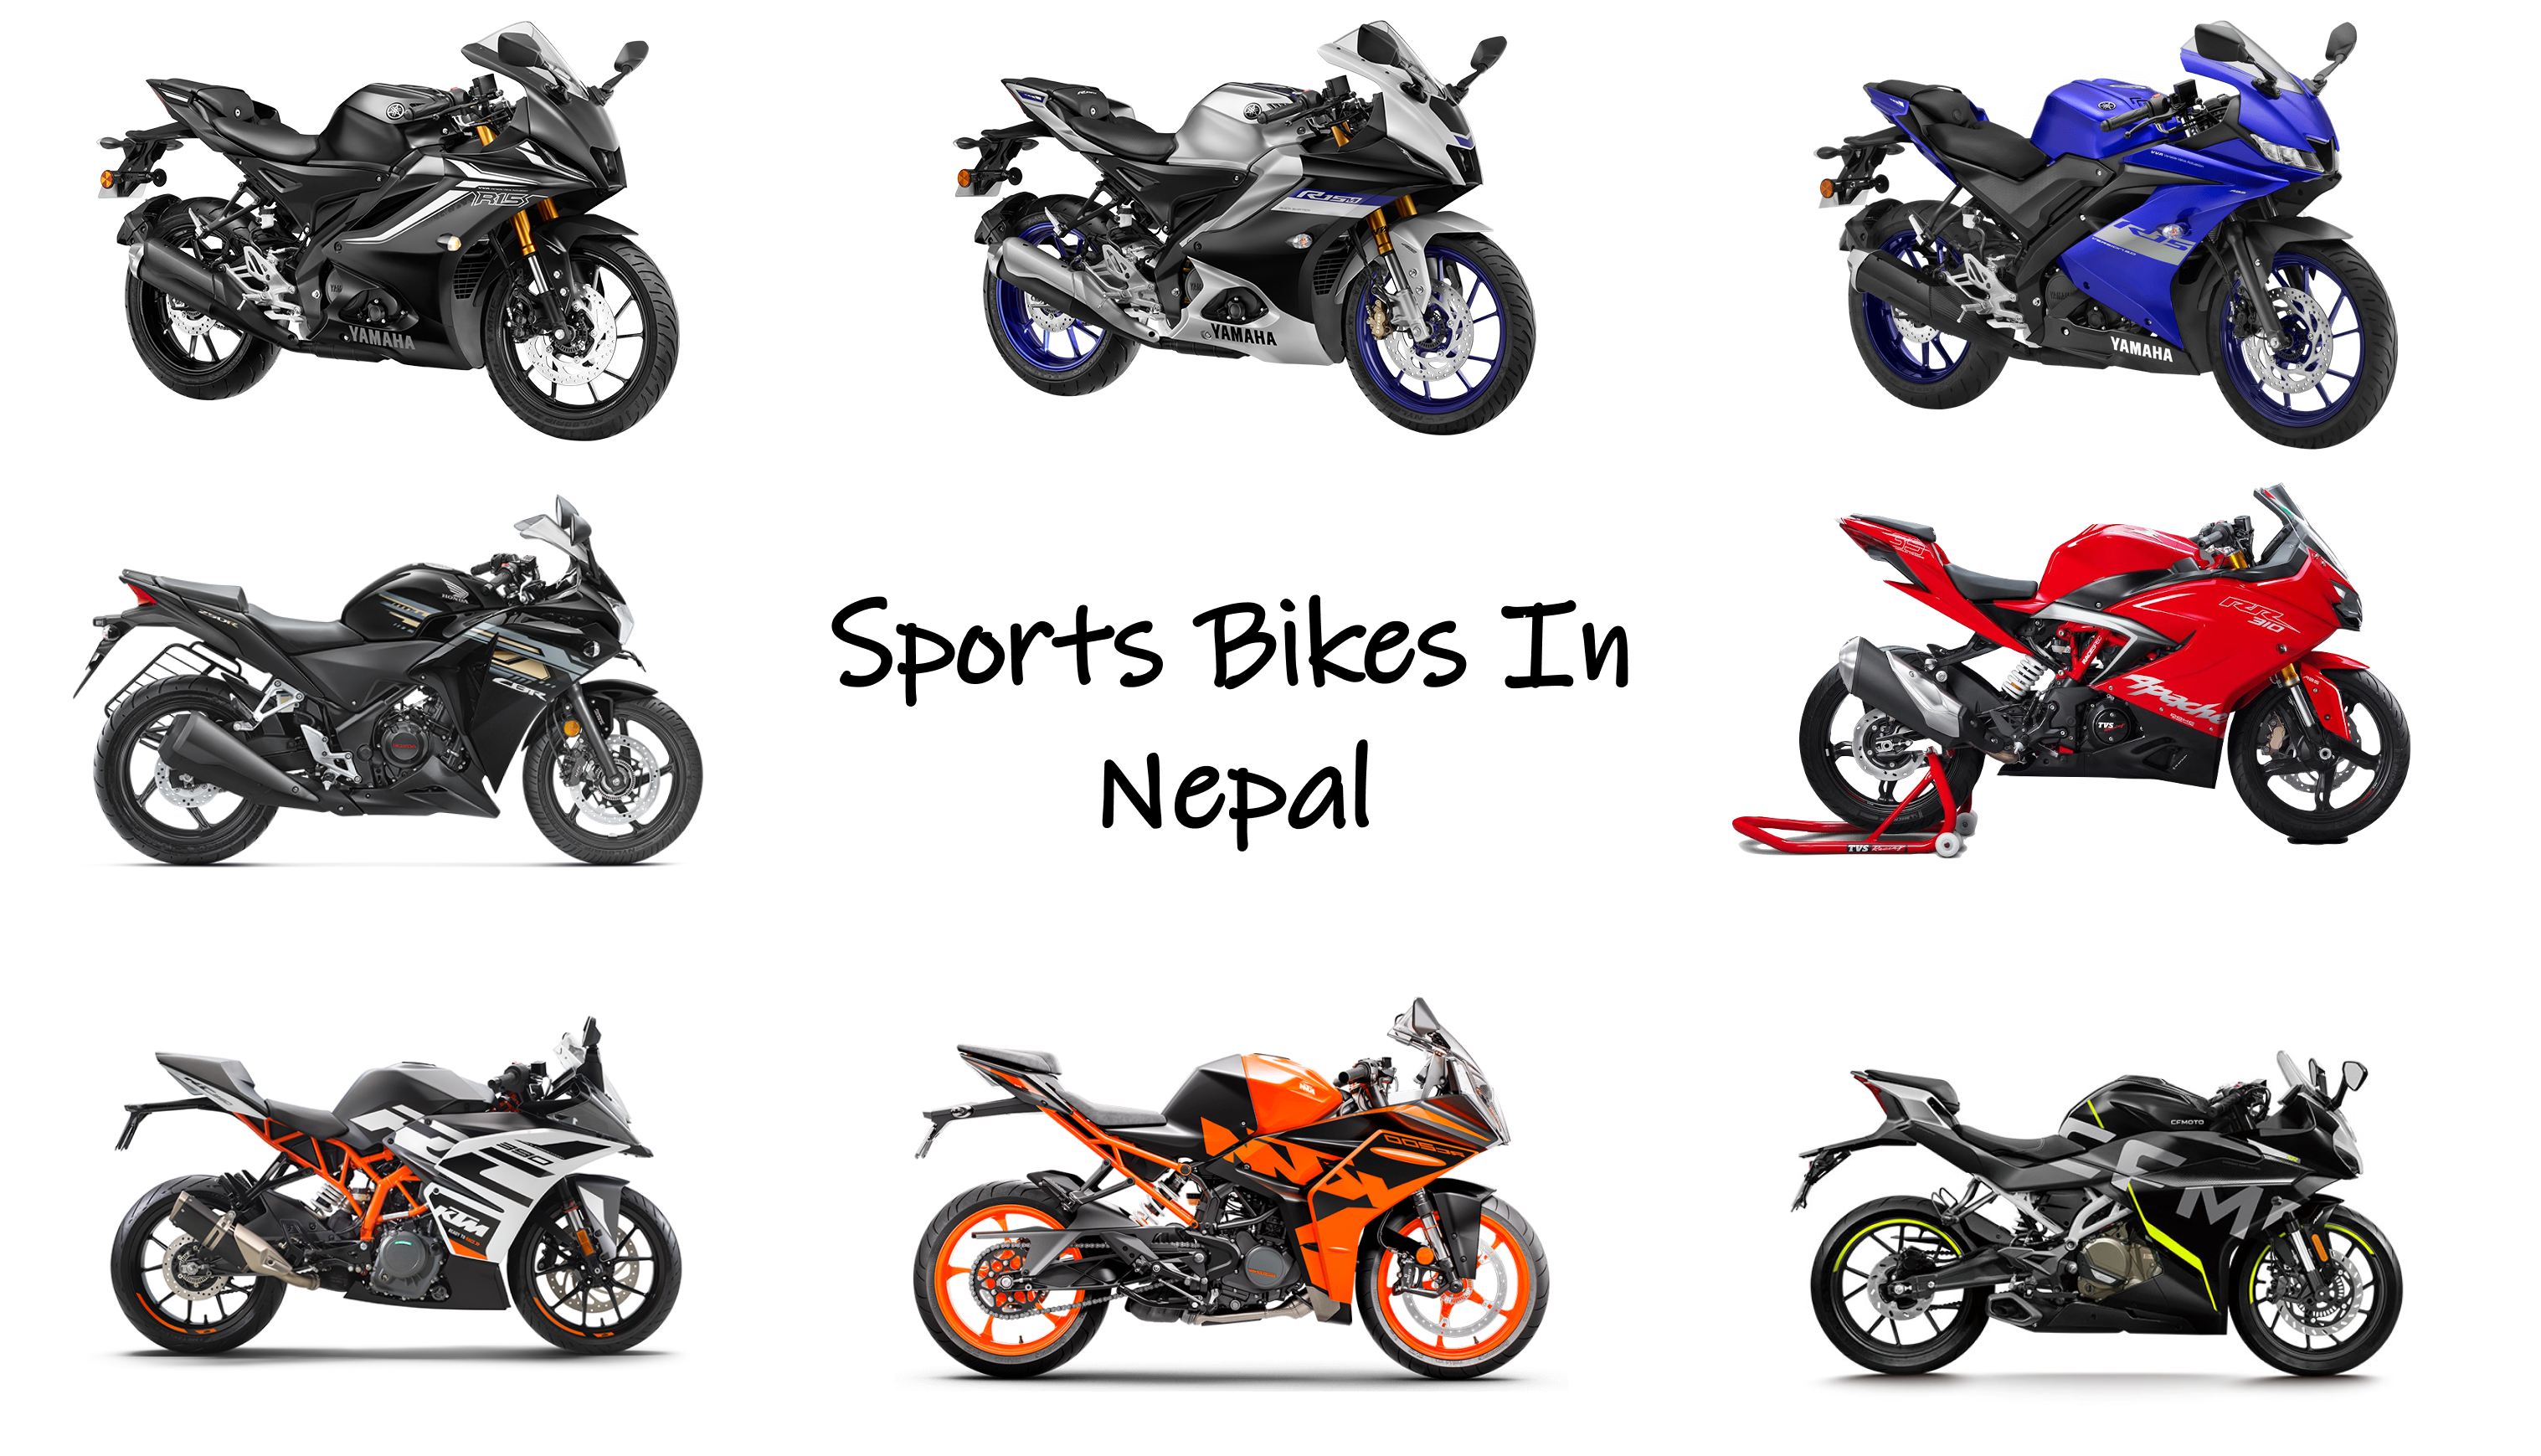 Sports bikes in Nepal